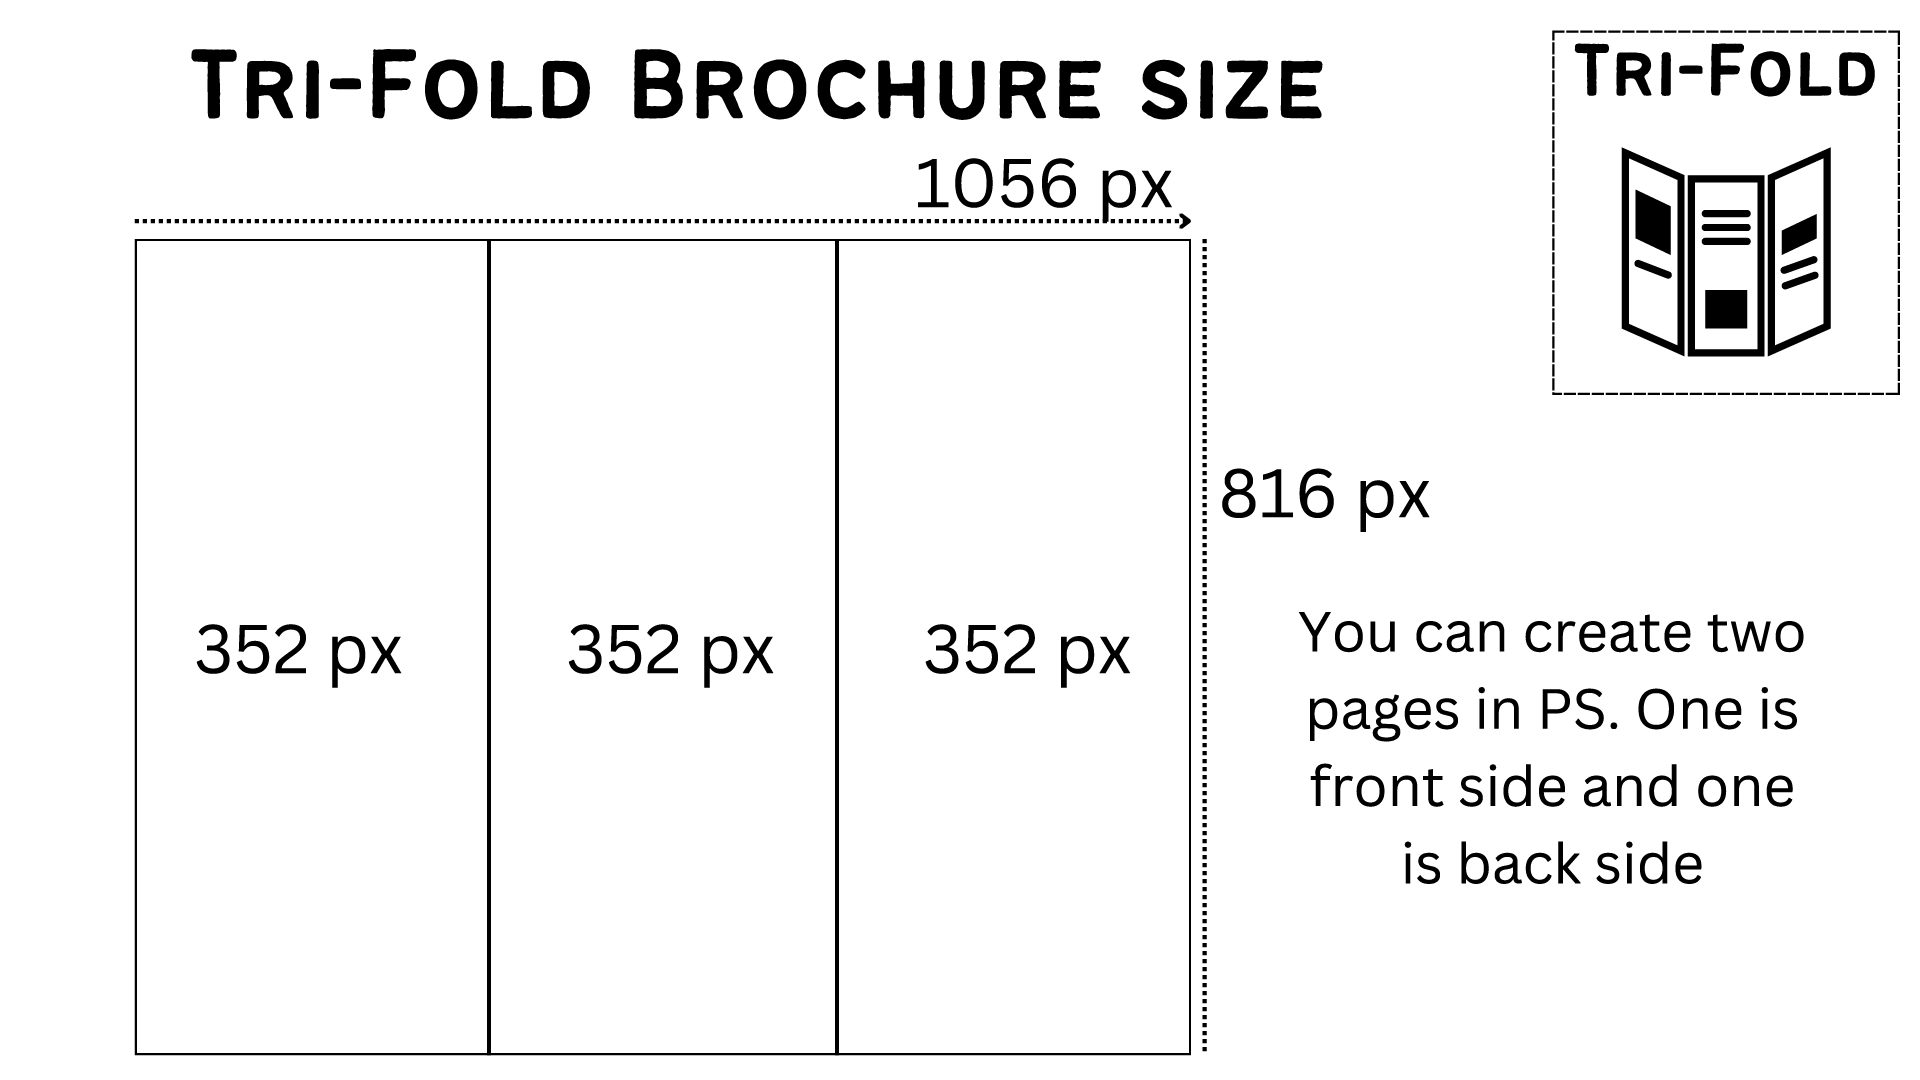 Tri-Fold Brochure size